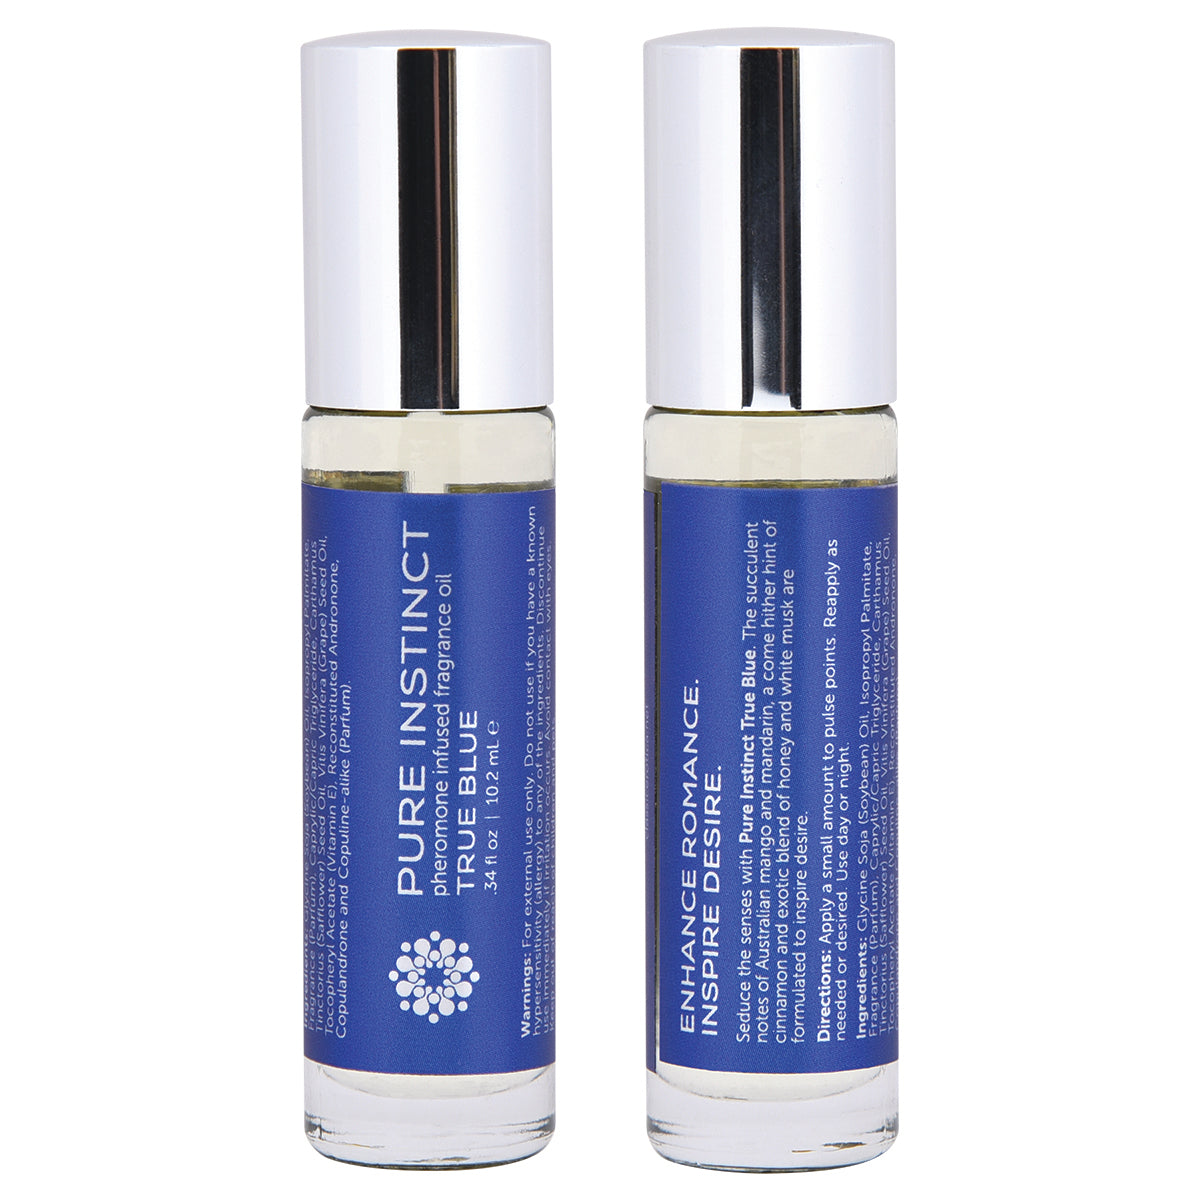 Pure Instinct True Blue Pheromone Fragrance Oil Roll-On 10.2ml